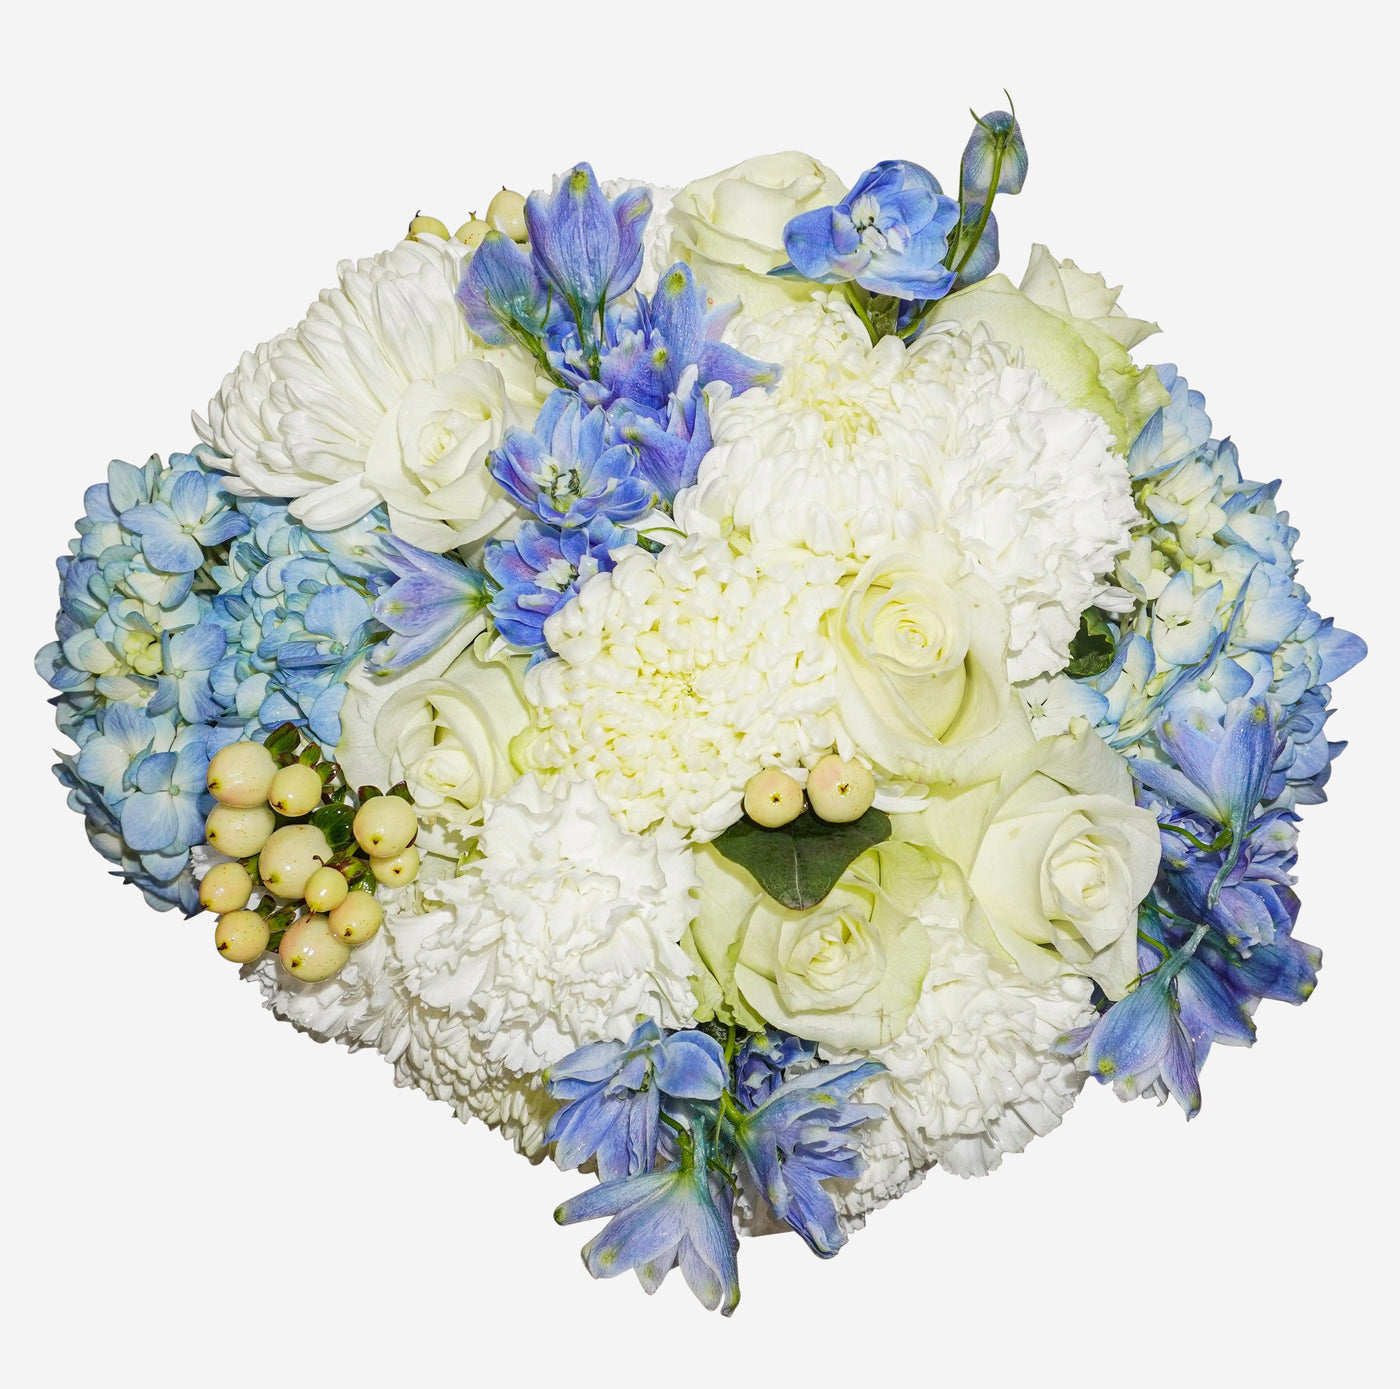 flower bouquet arrangements online